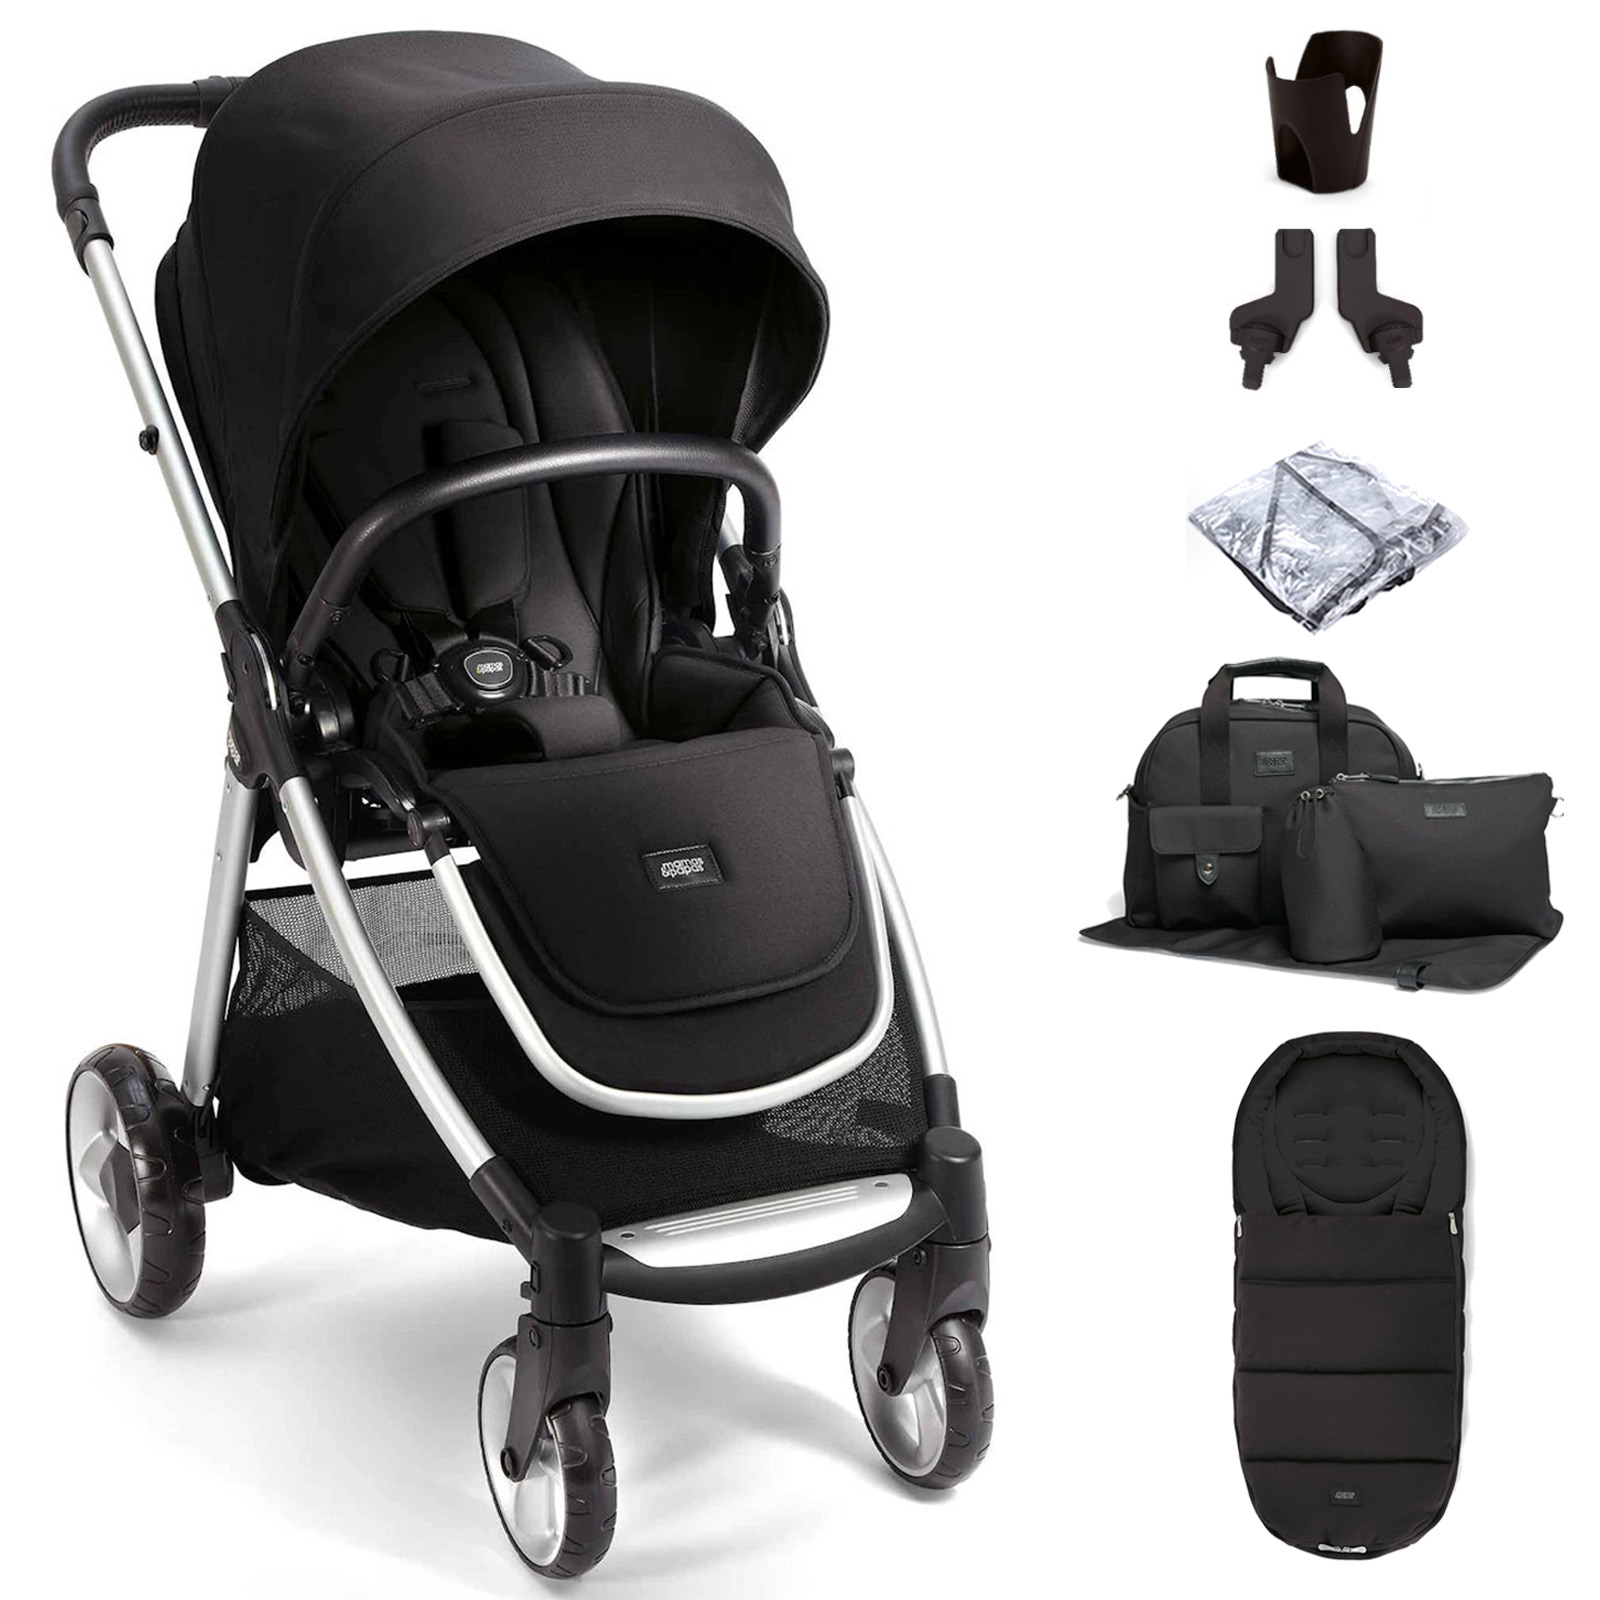 Mamas & Papas Flip XT2 Pushchair with Accessories - Black